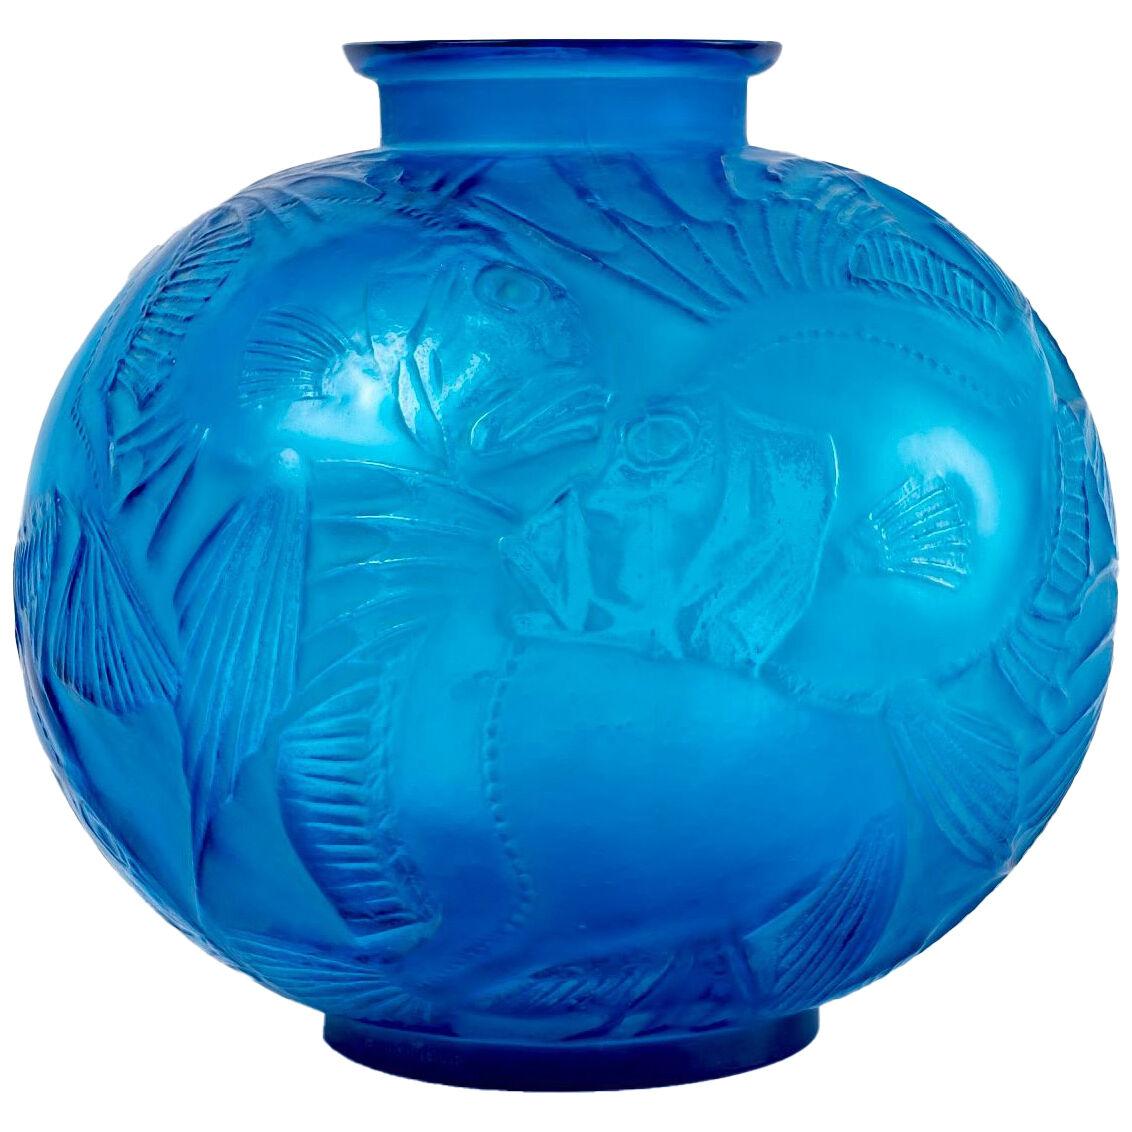 1921 René Lalique - Vase Poissons Electric Blue Glass With White Patina